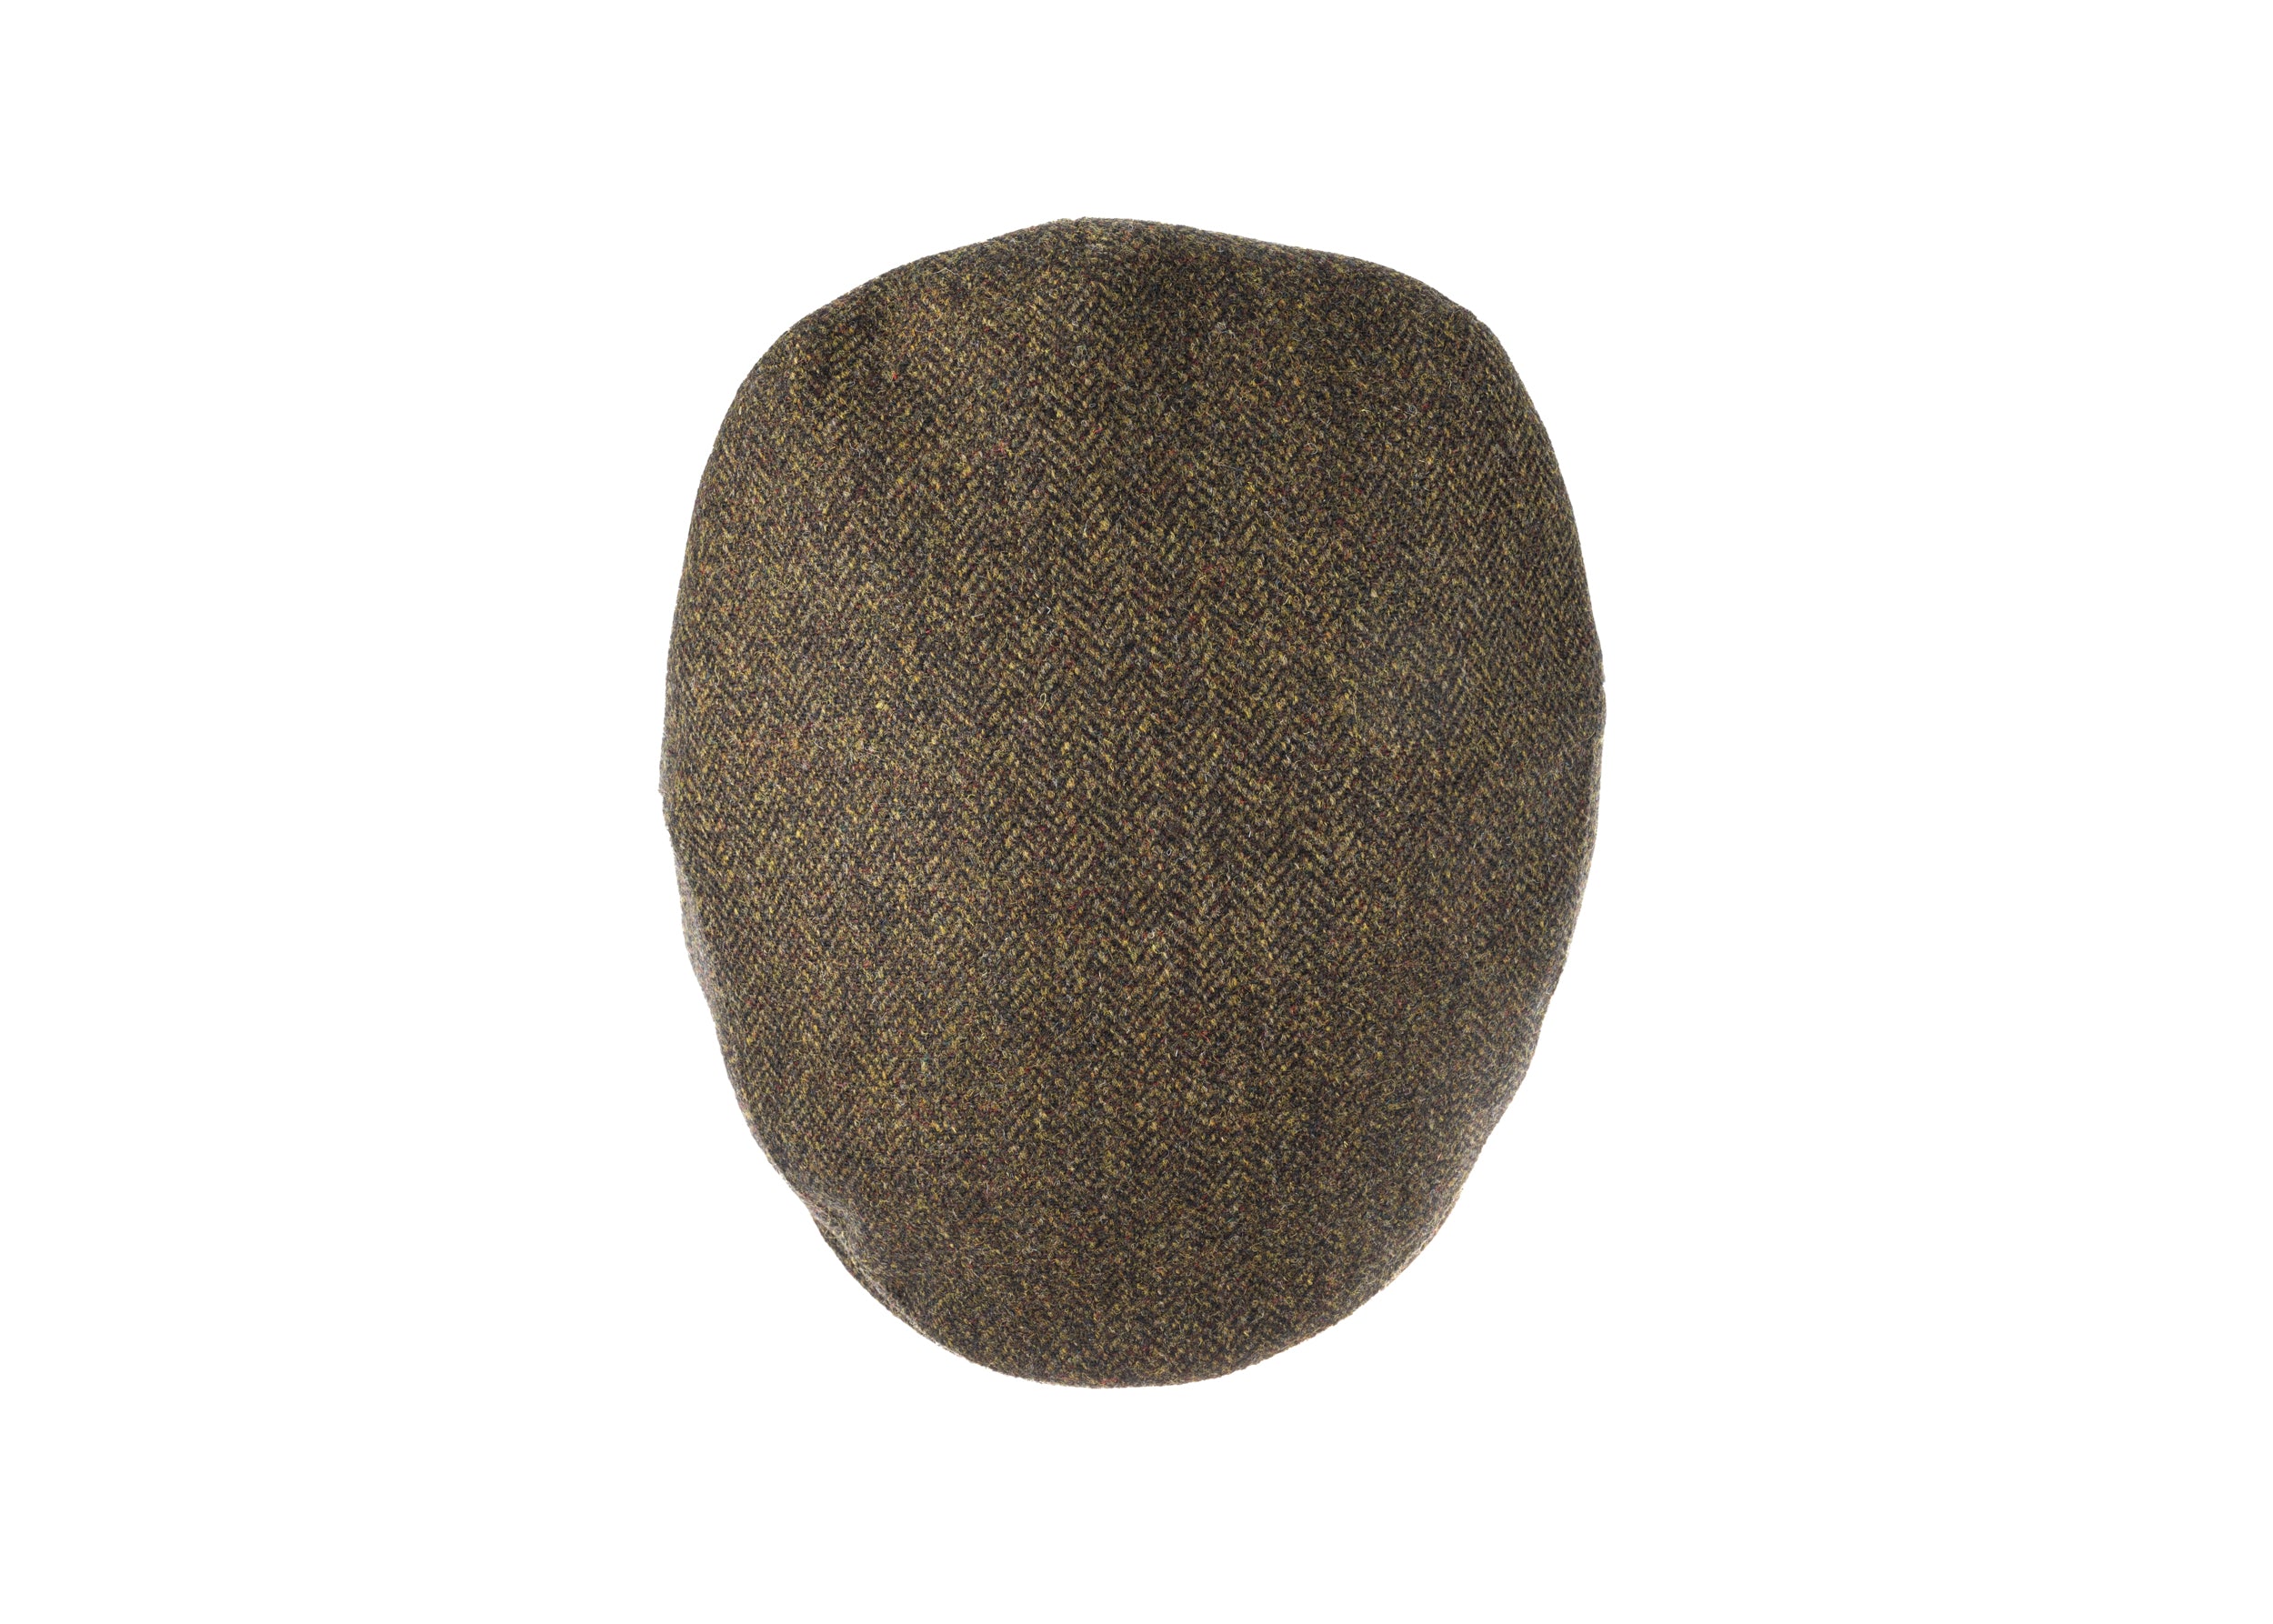 Balmoral Tweed Flat Cap in Z506